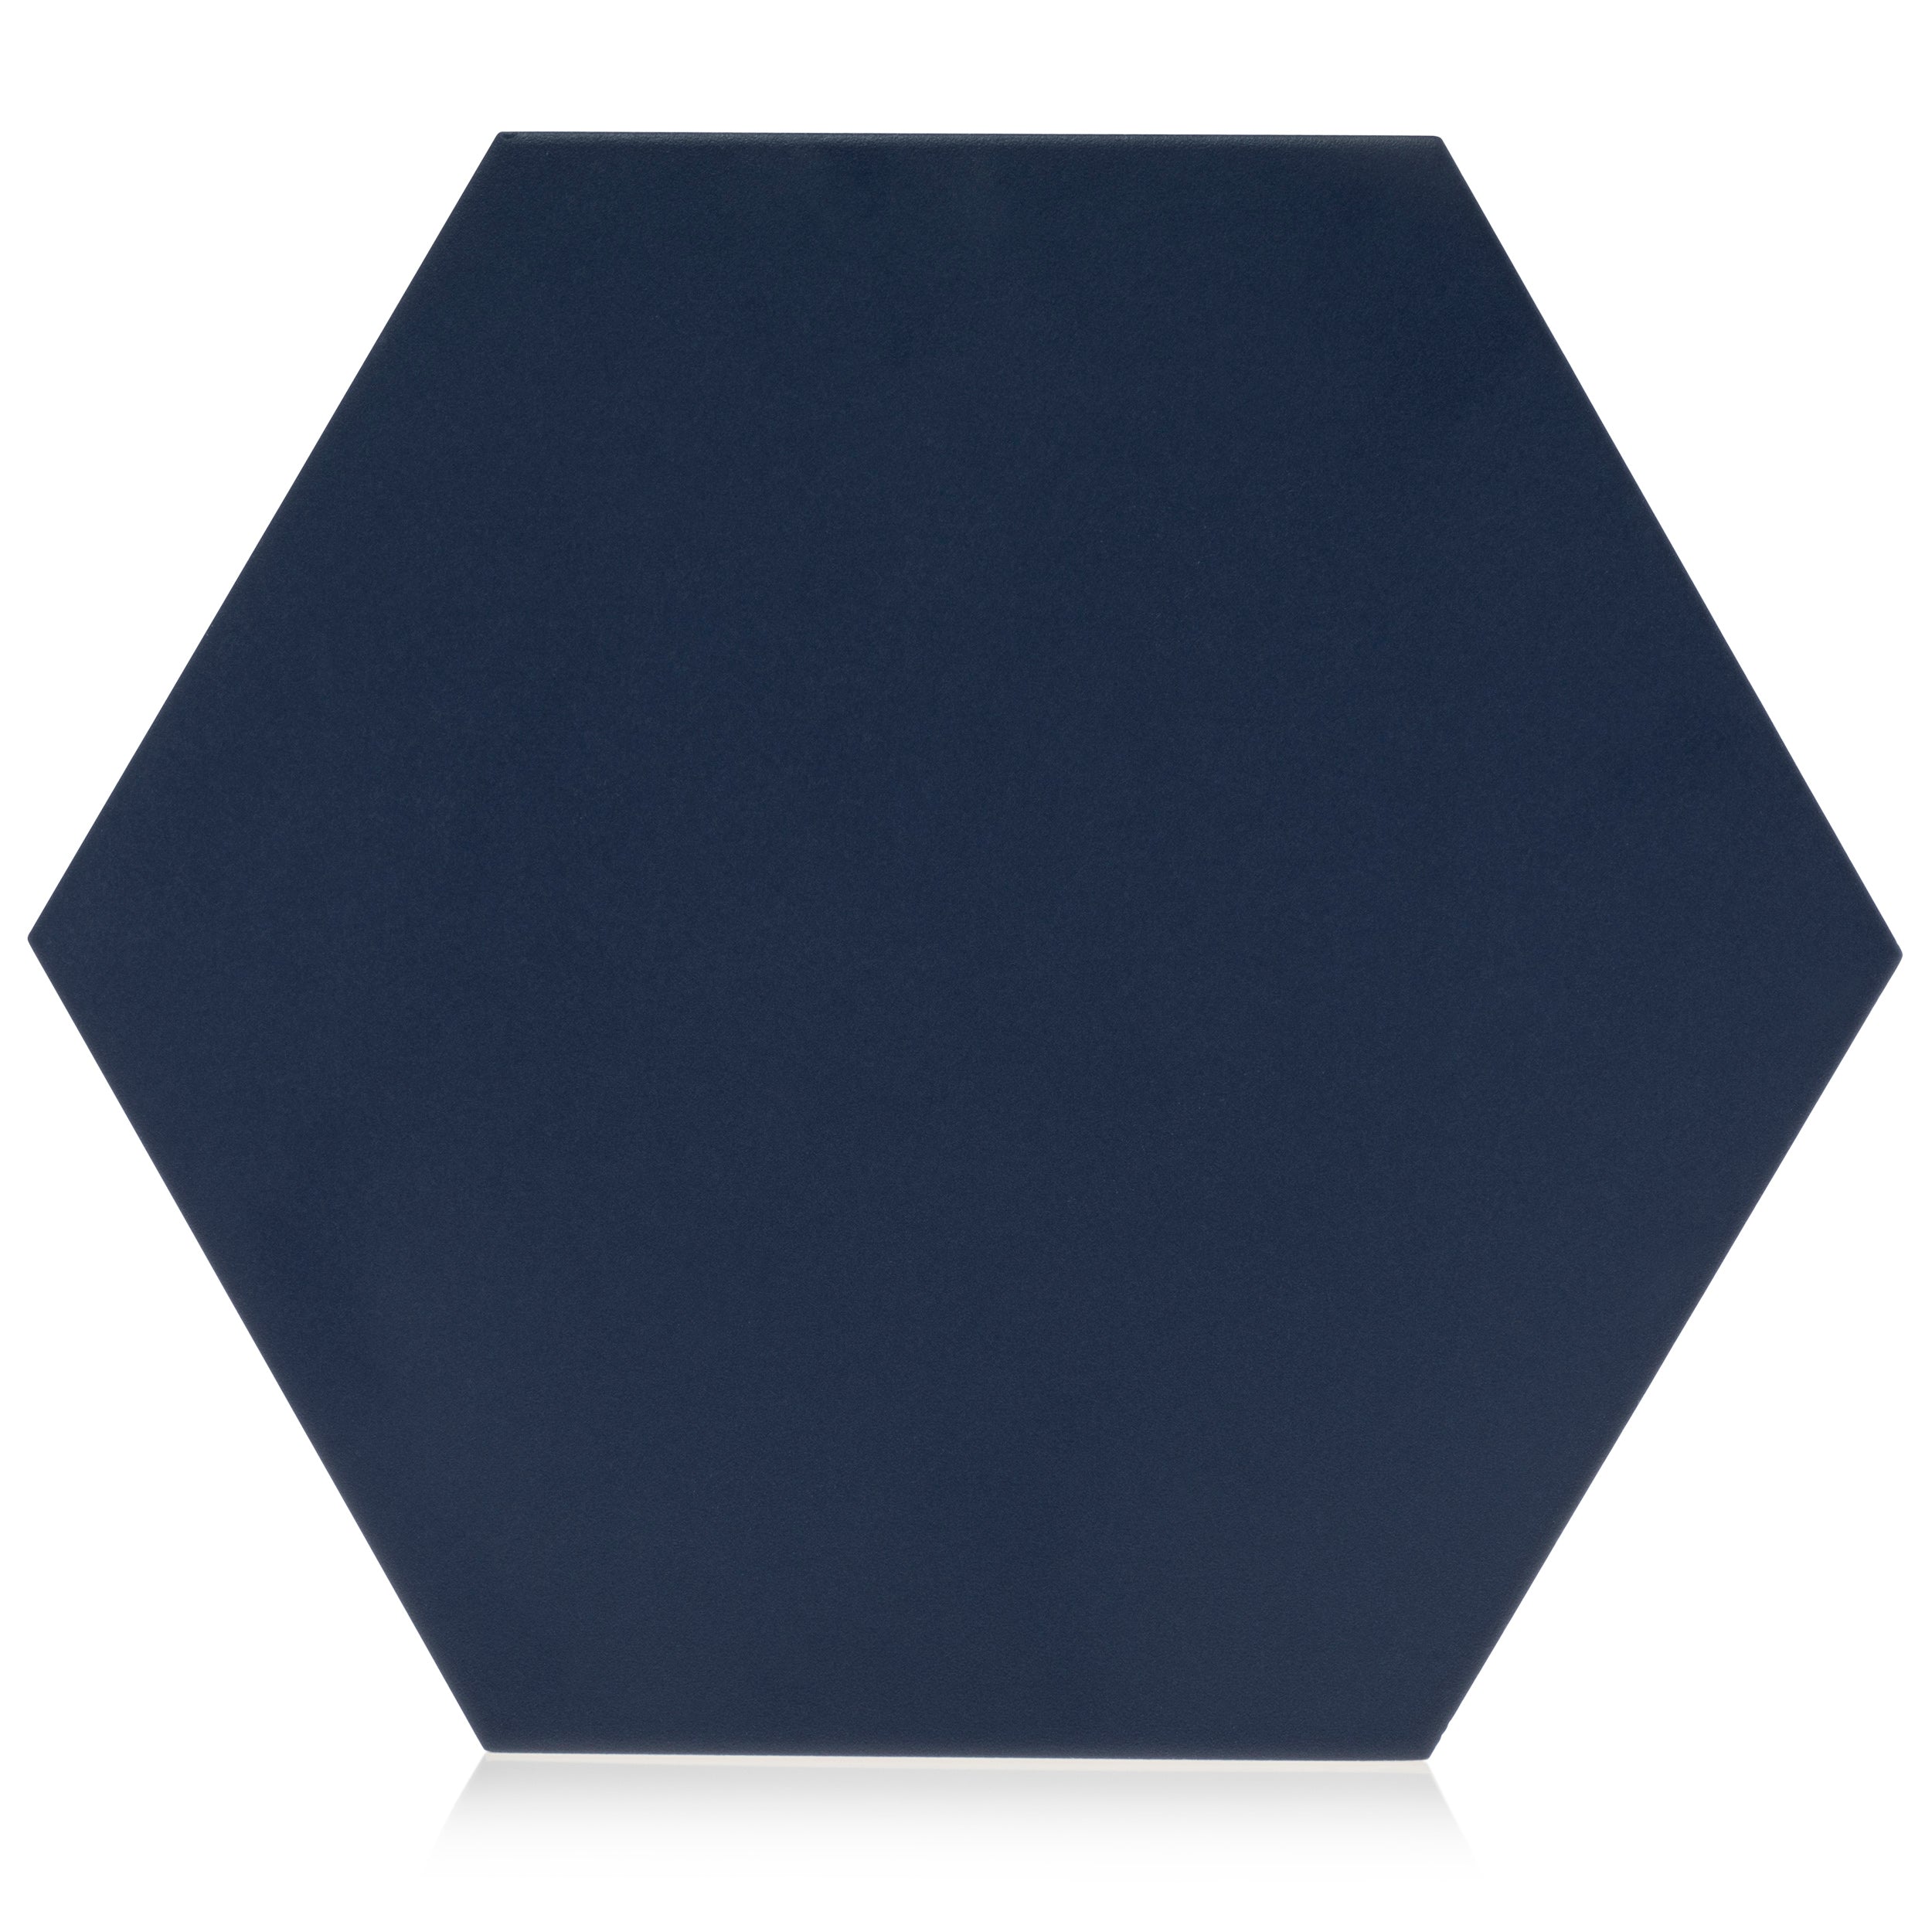 9x10 Hexagon Navy Blue porcelain tile - Industry Tile